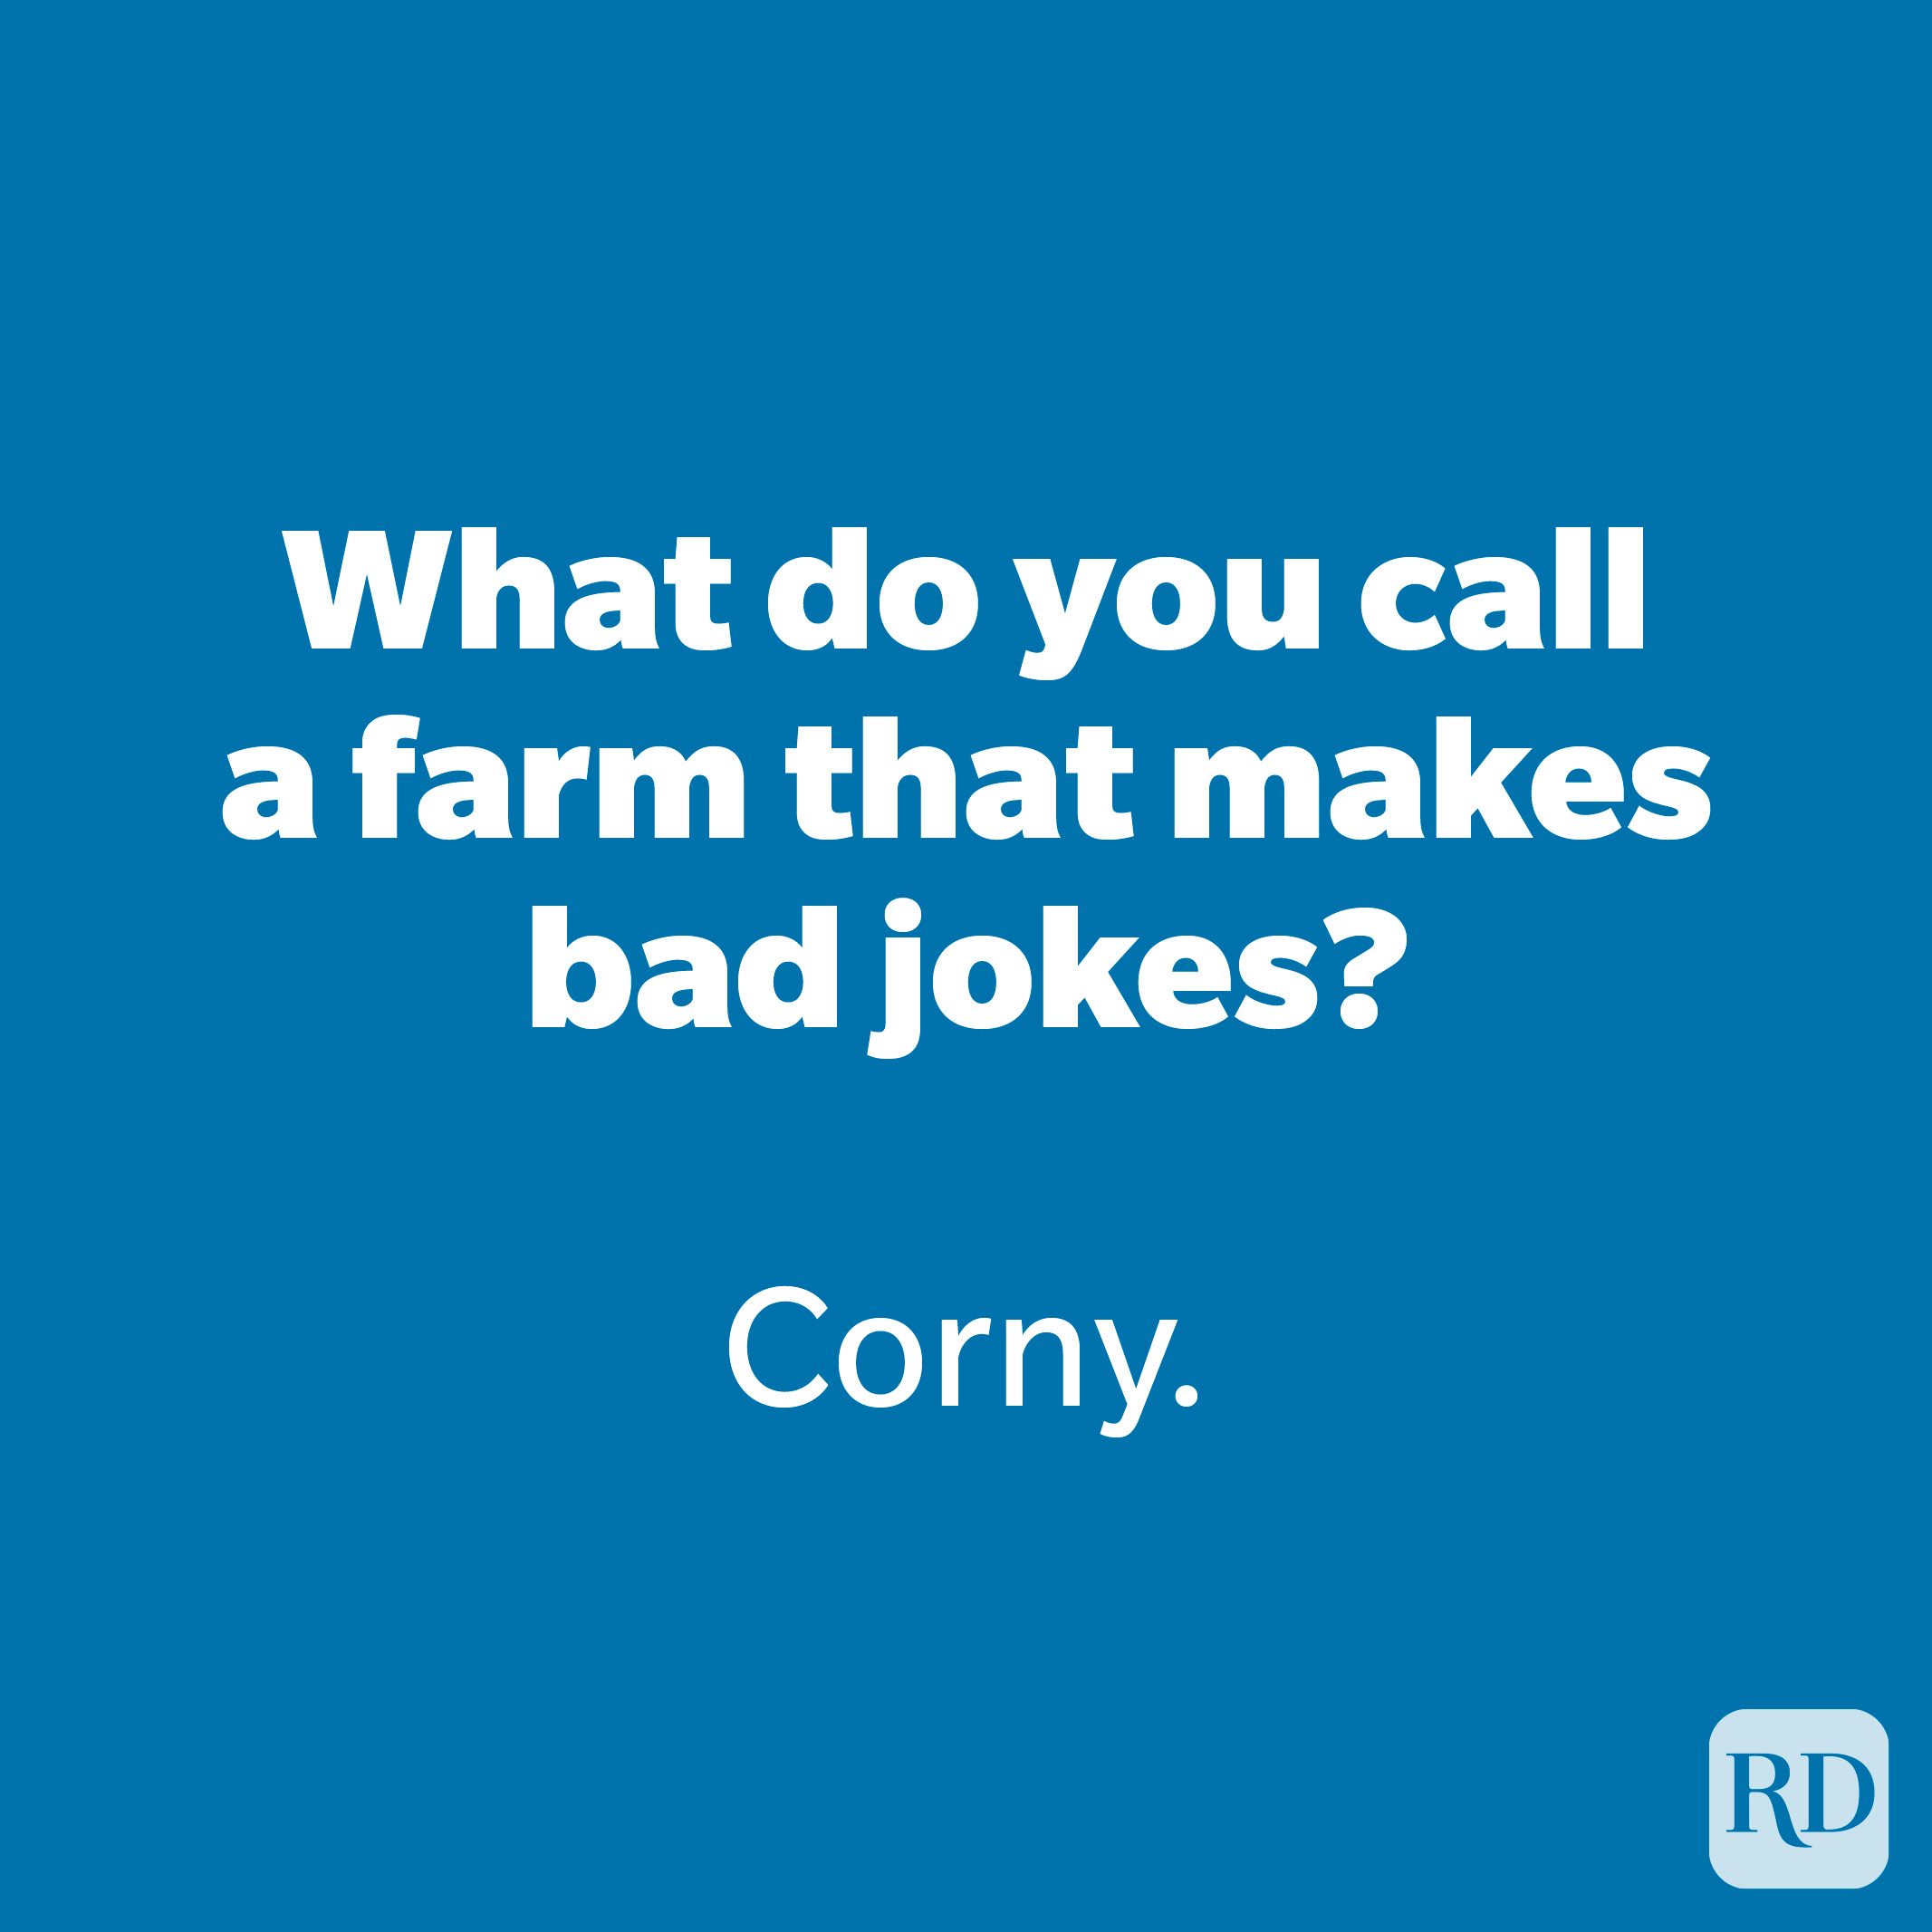 What do you call a farm that makes bad jokes?